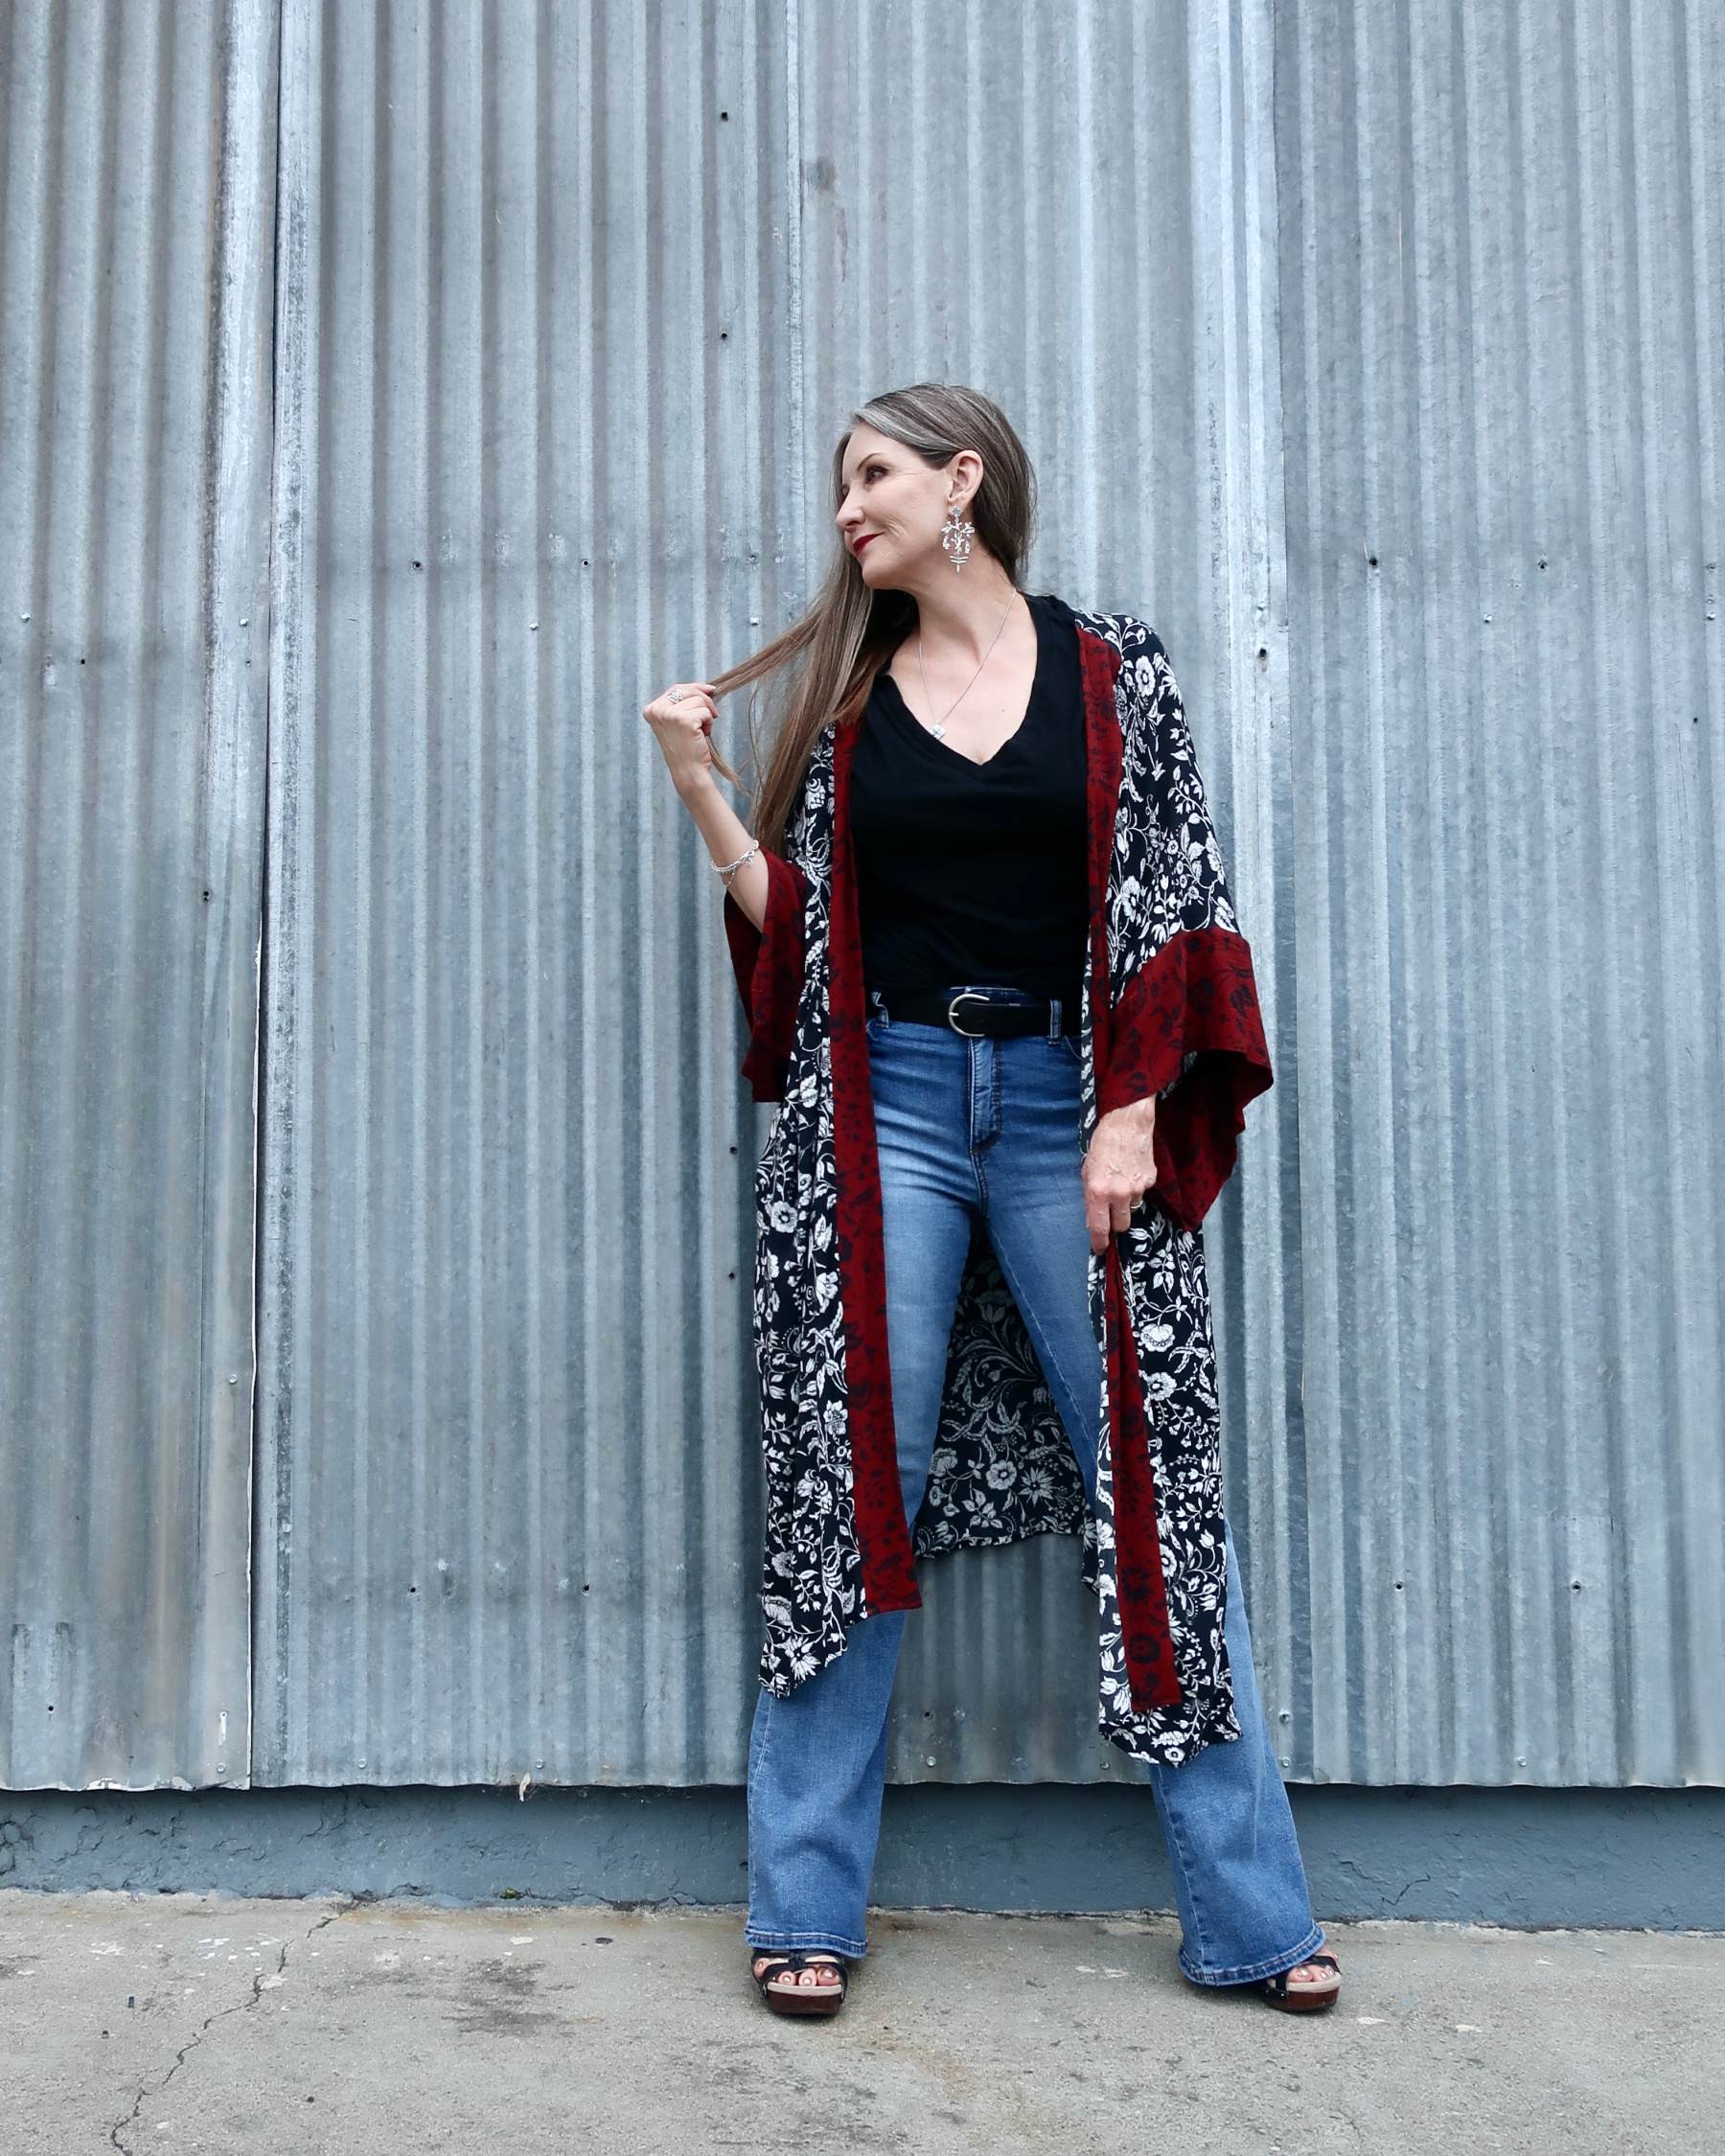 Kimono/Duster, Flattering Flare Jeans - Fashion Should Be Fun